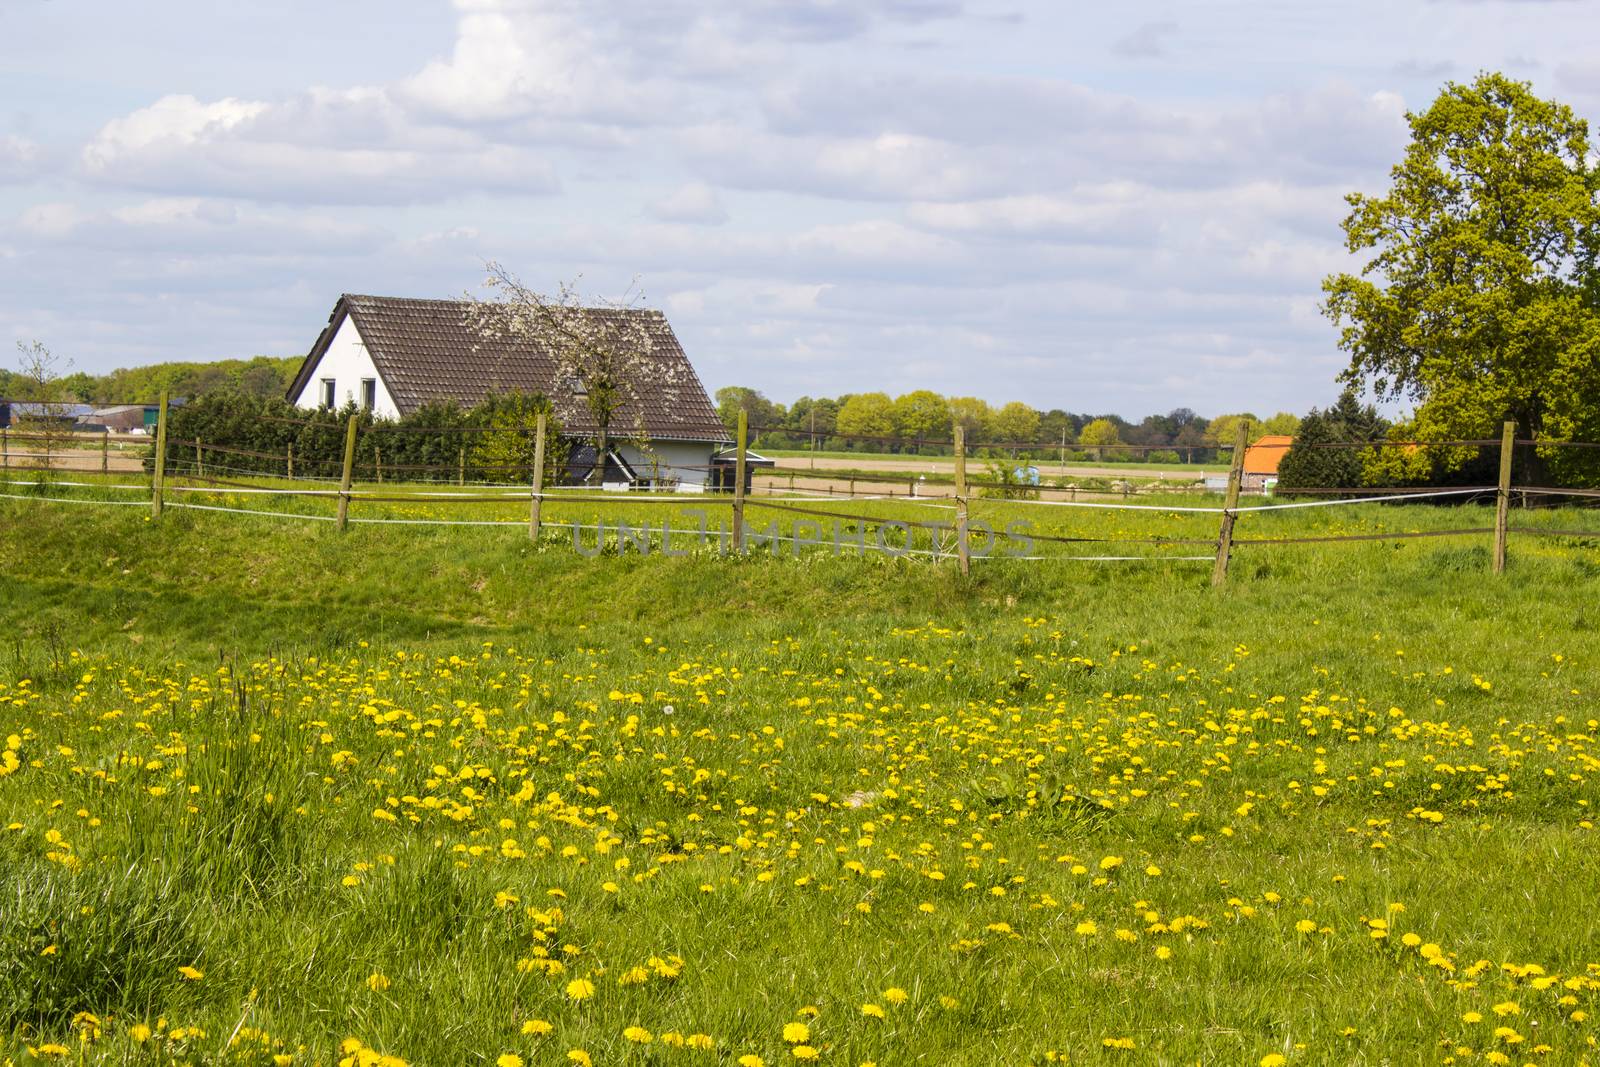 Spring meadows around a rural house, Lower Rhine, Germany by miradrozdowski